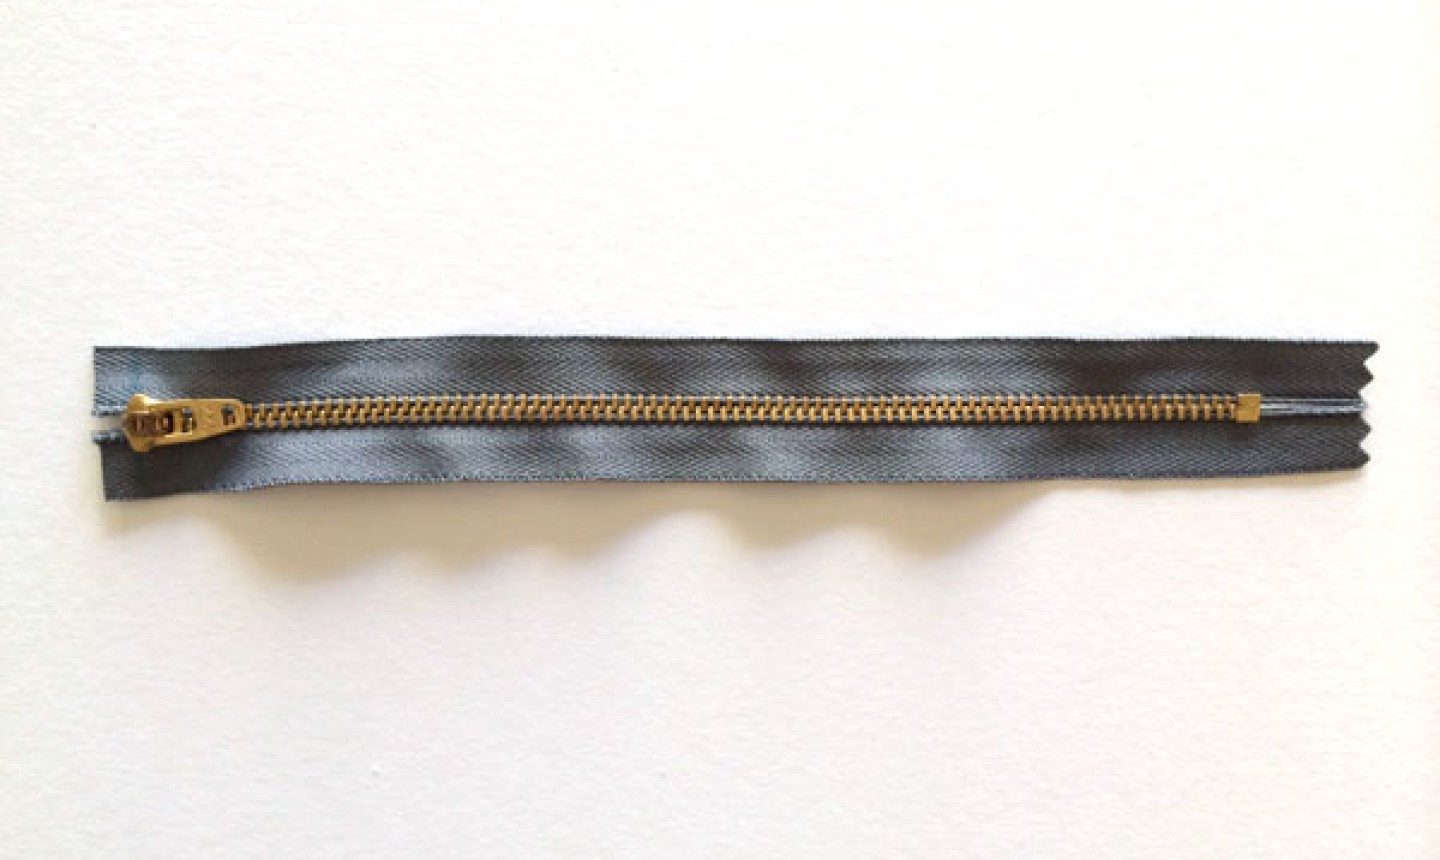 shortened black zipper